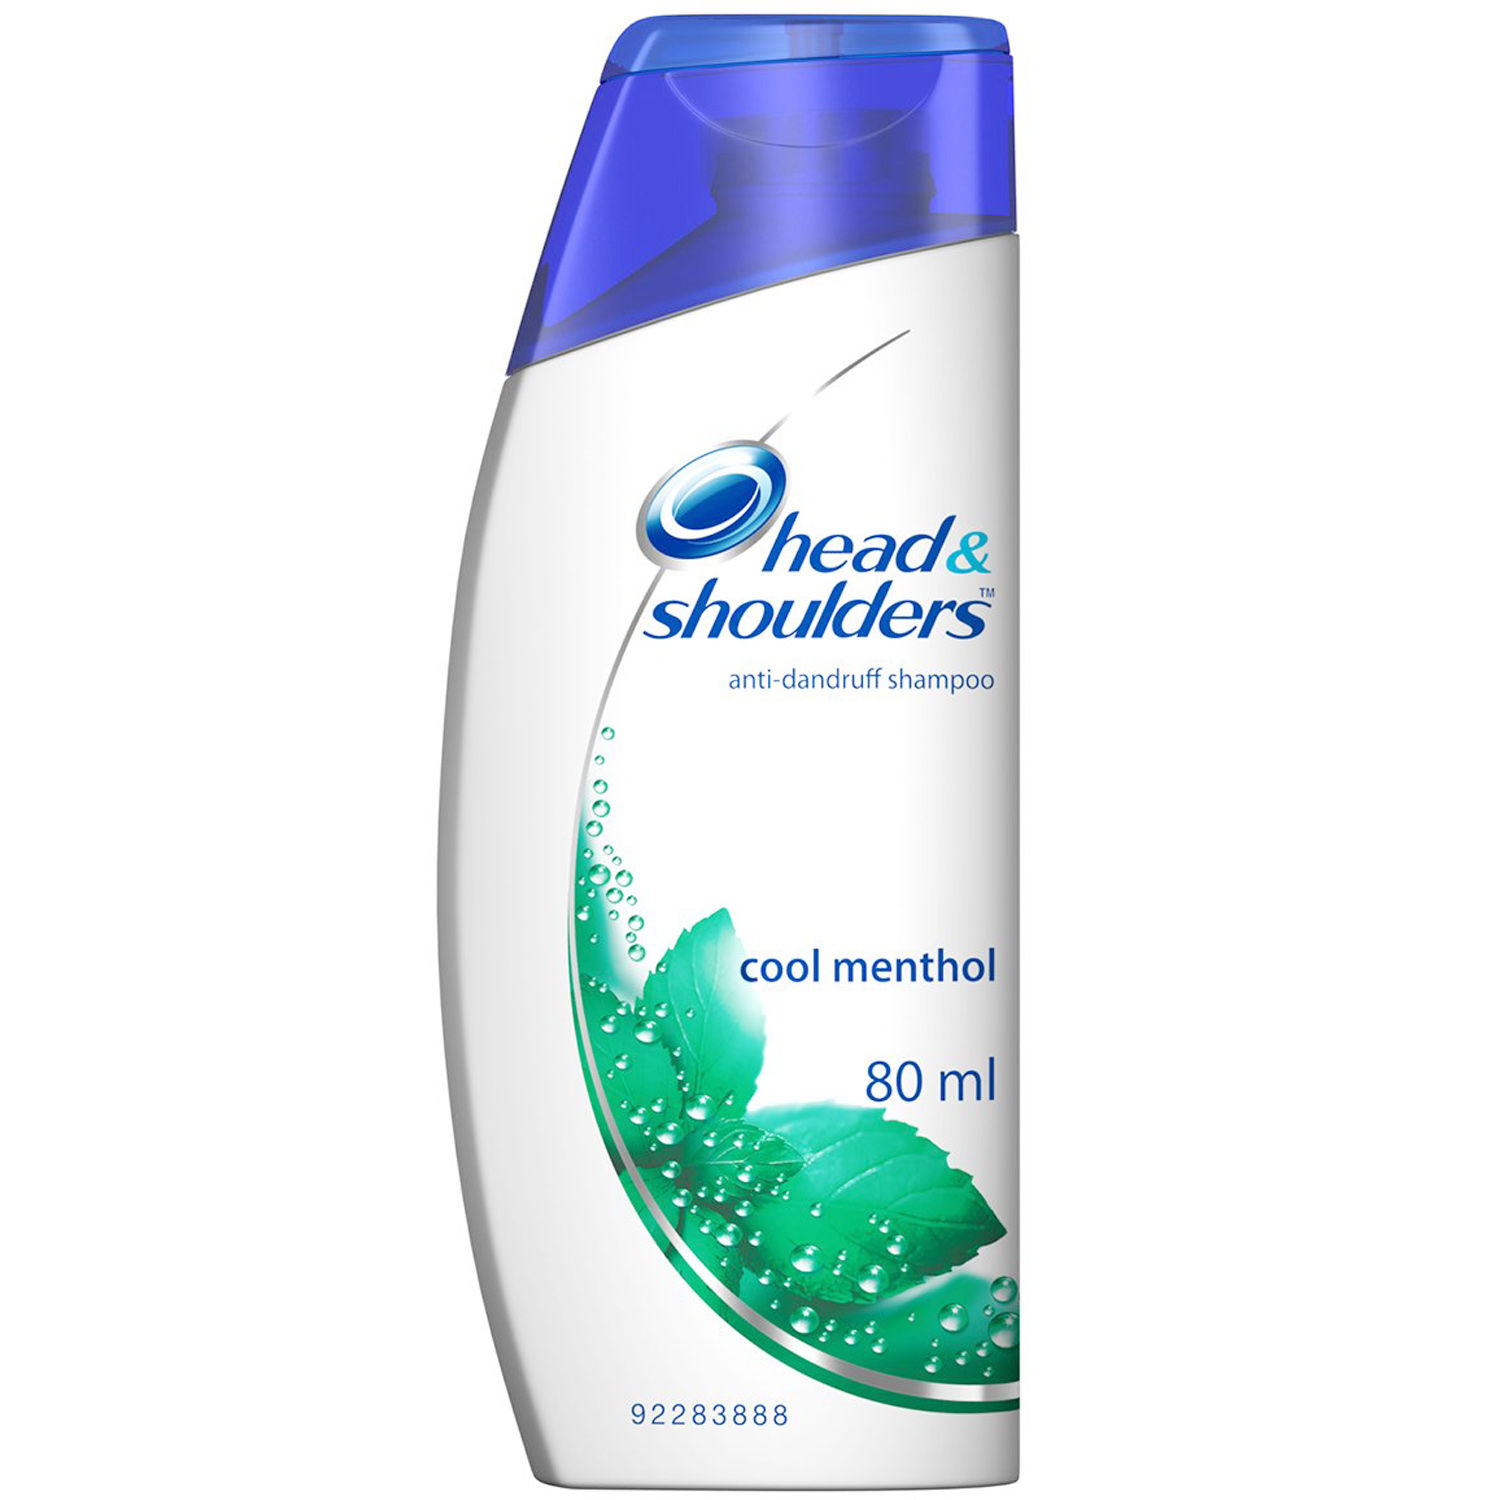 Head & Shoulders Anti Dandruff Cool Menthol Shampoo, 80 ml, Pack of 1 